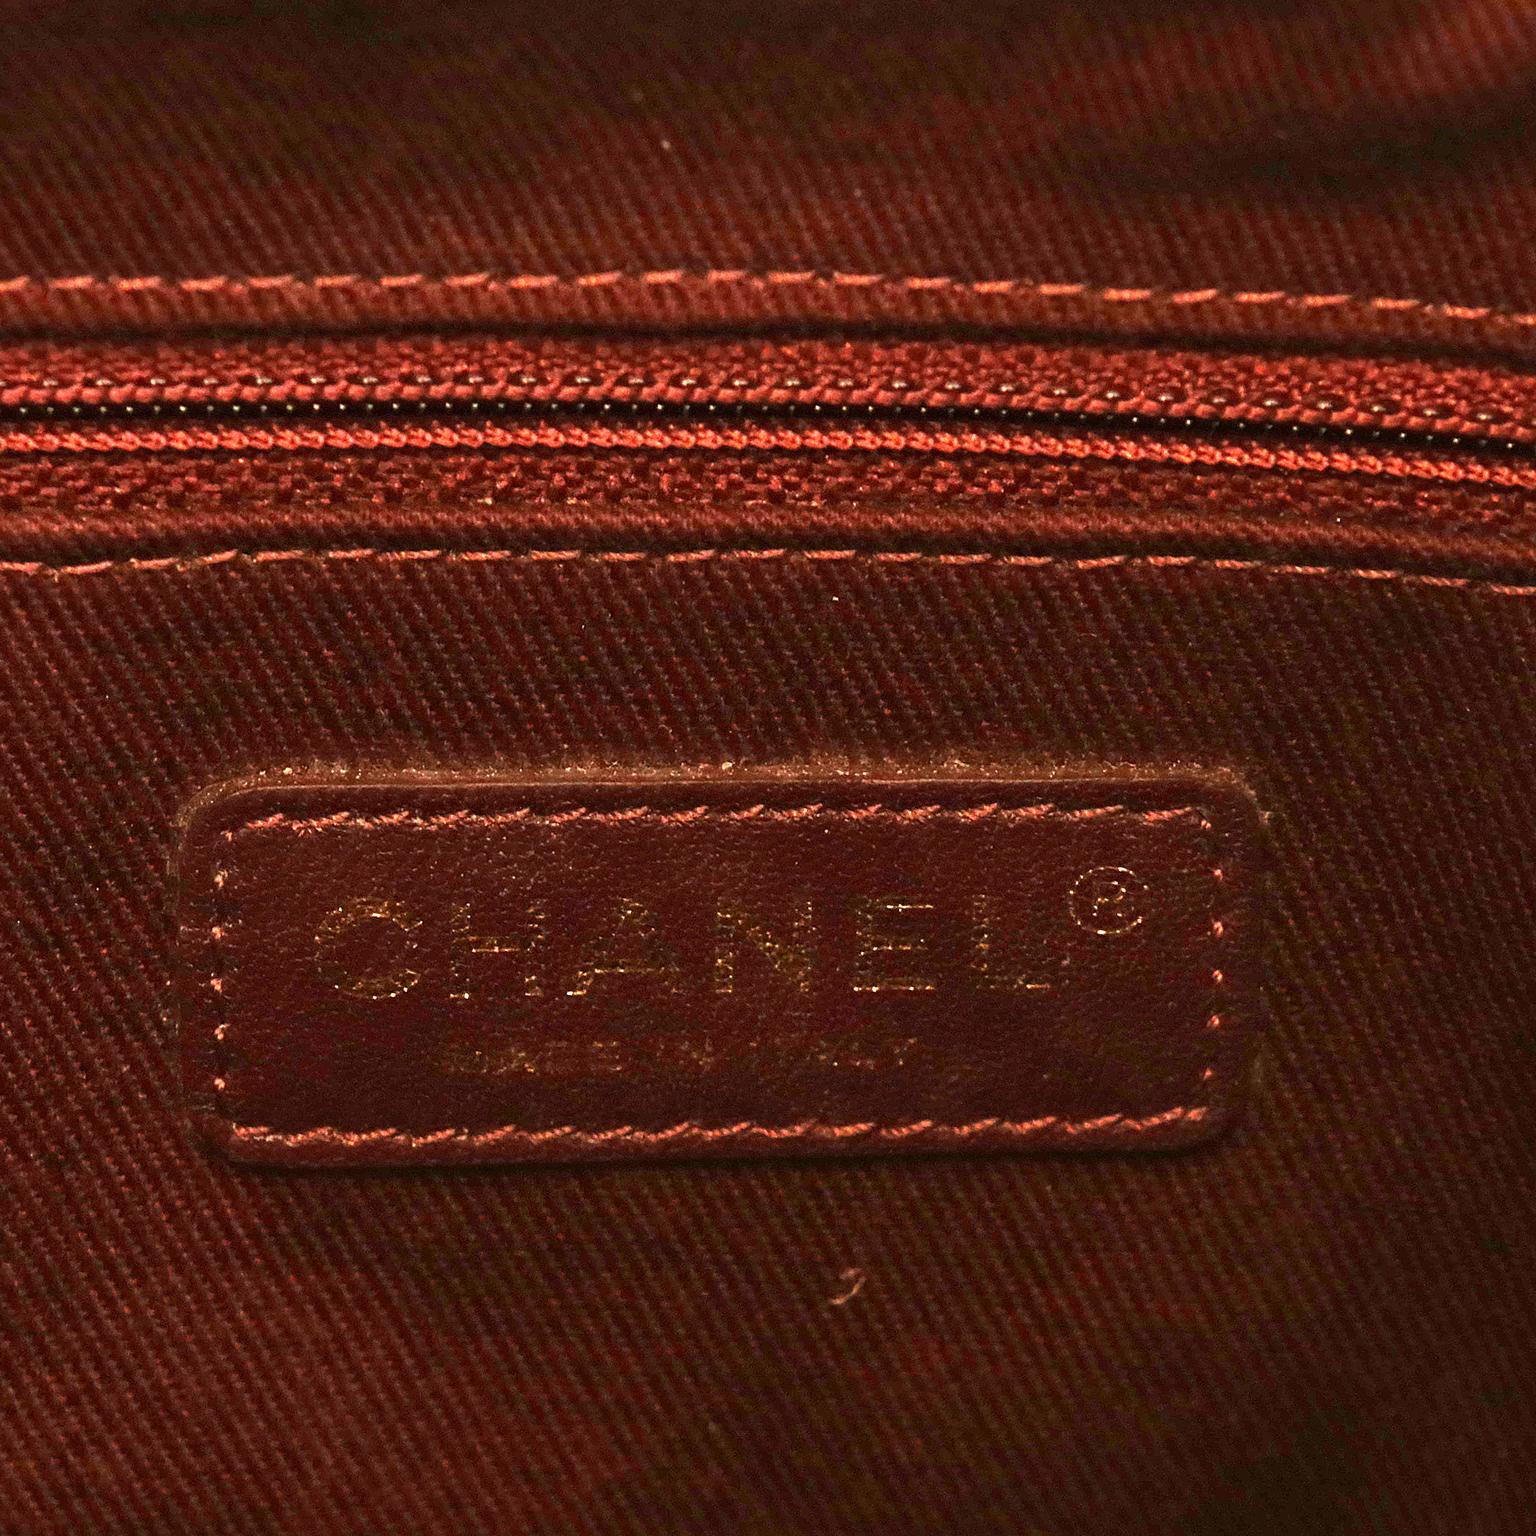 Chanel Praline Distressed Leather Saddle Bag with Fringe 2